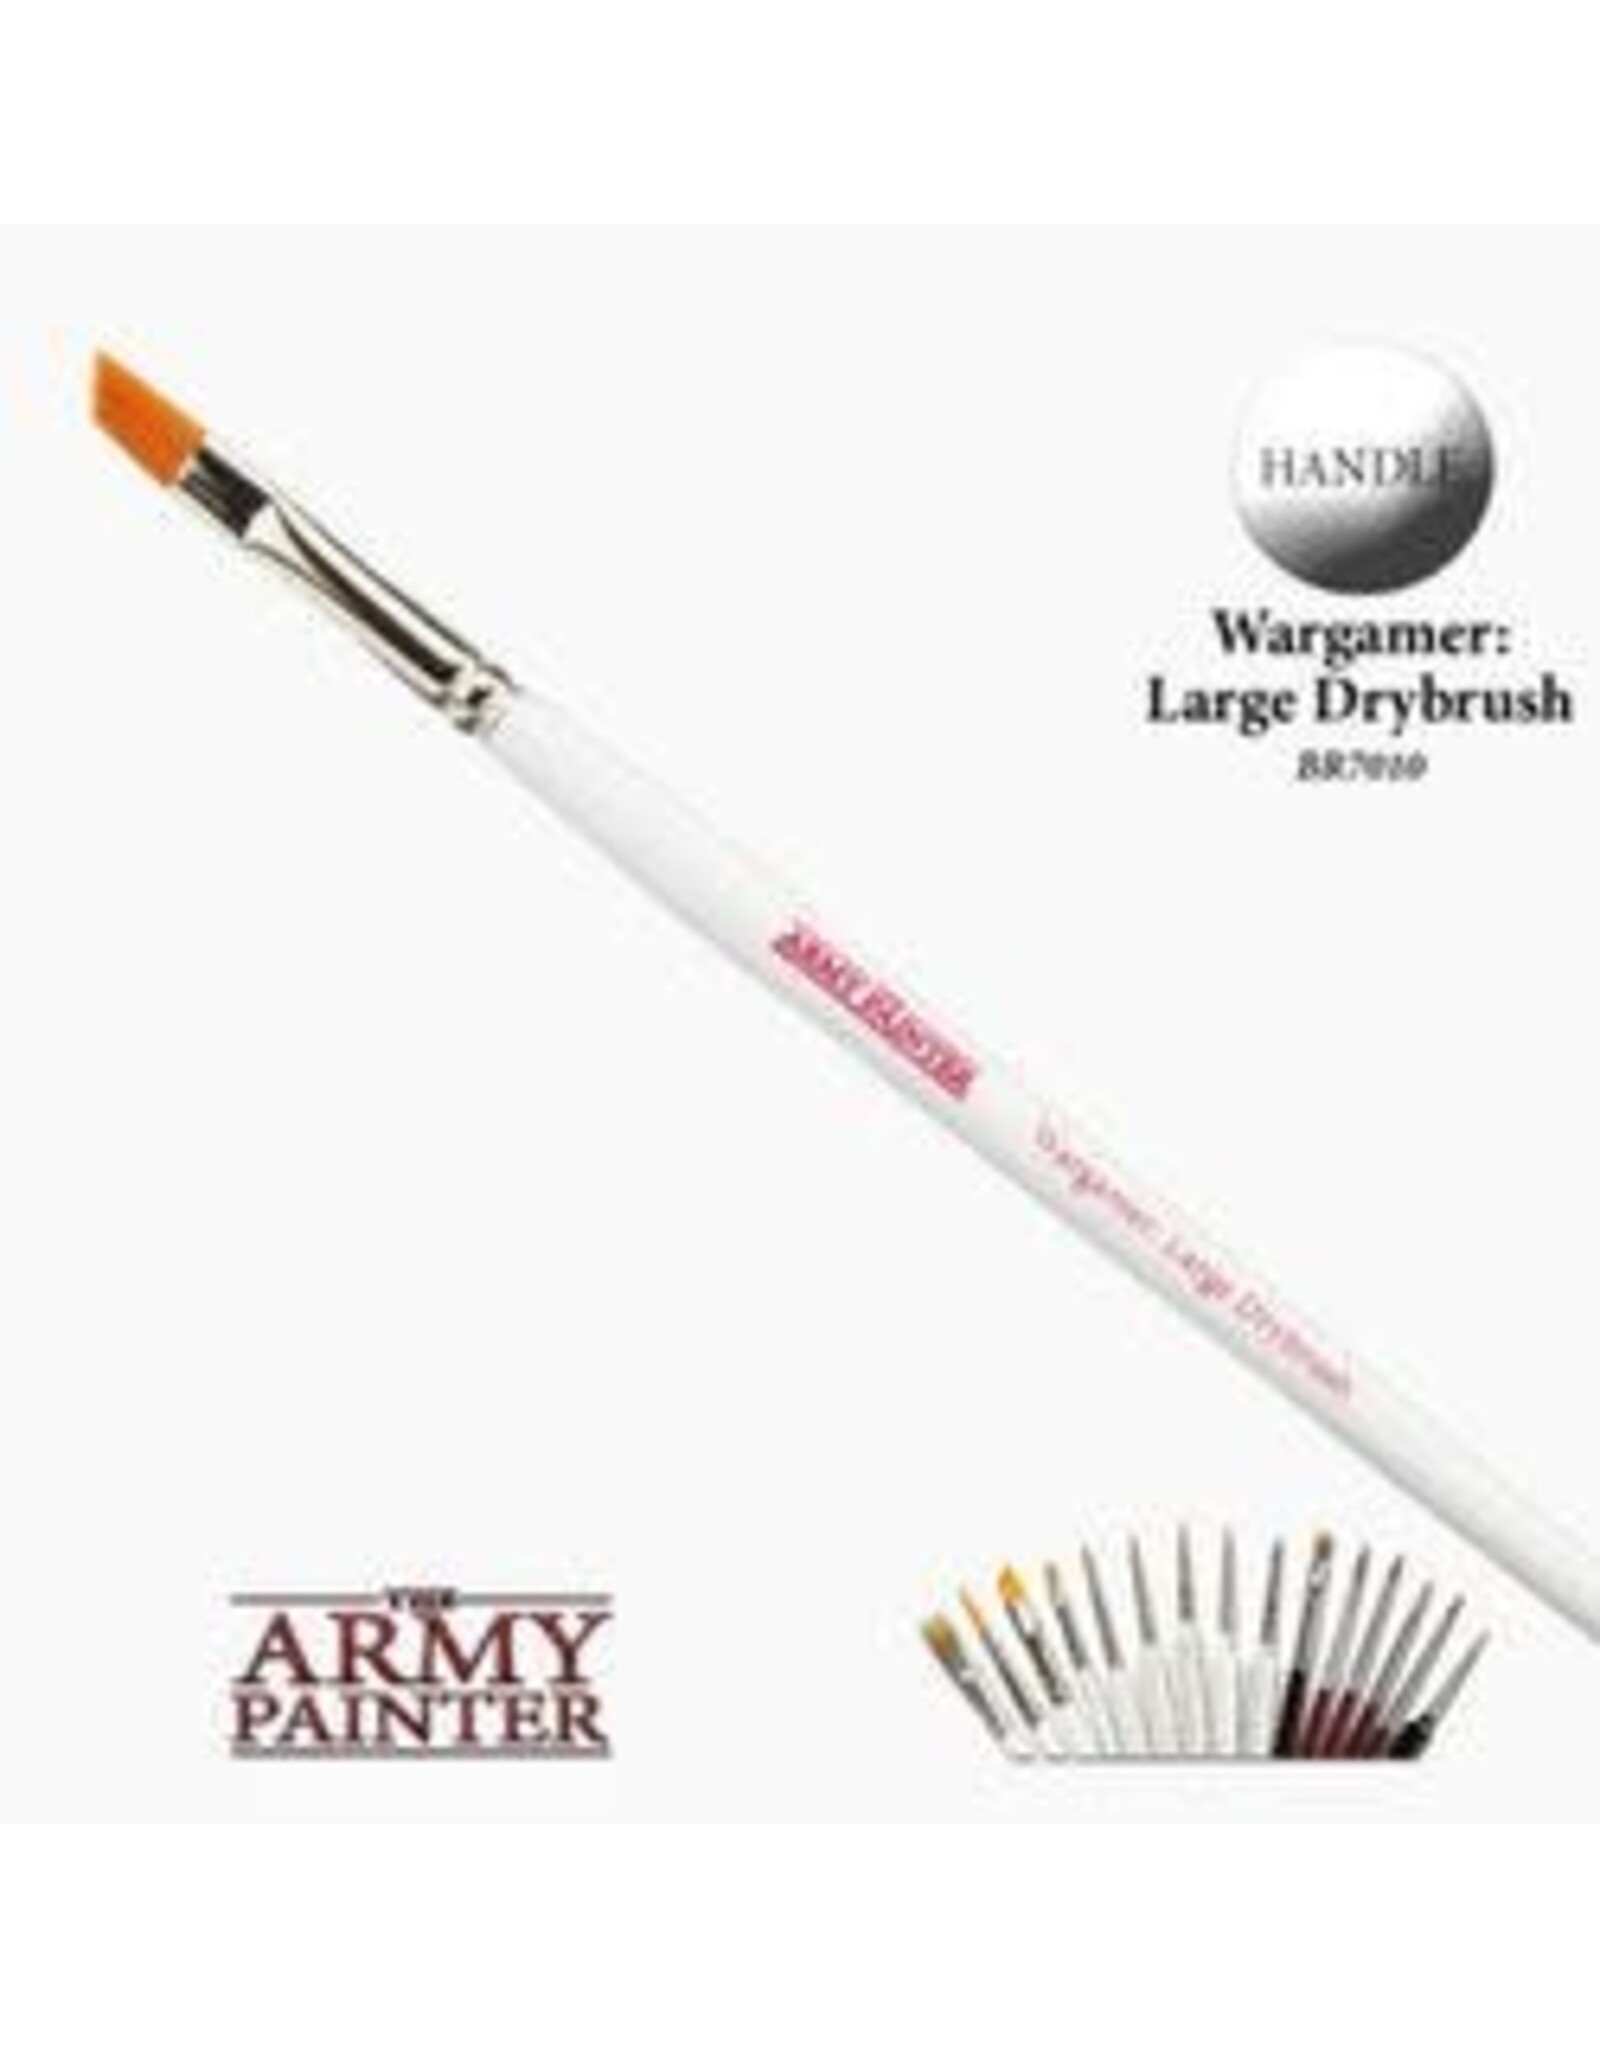 Army Painter Army Painter Brush: Large Drybrush